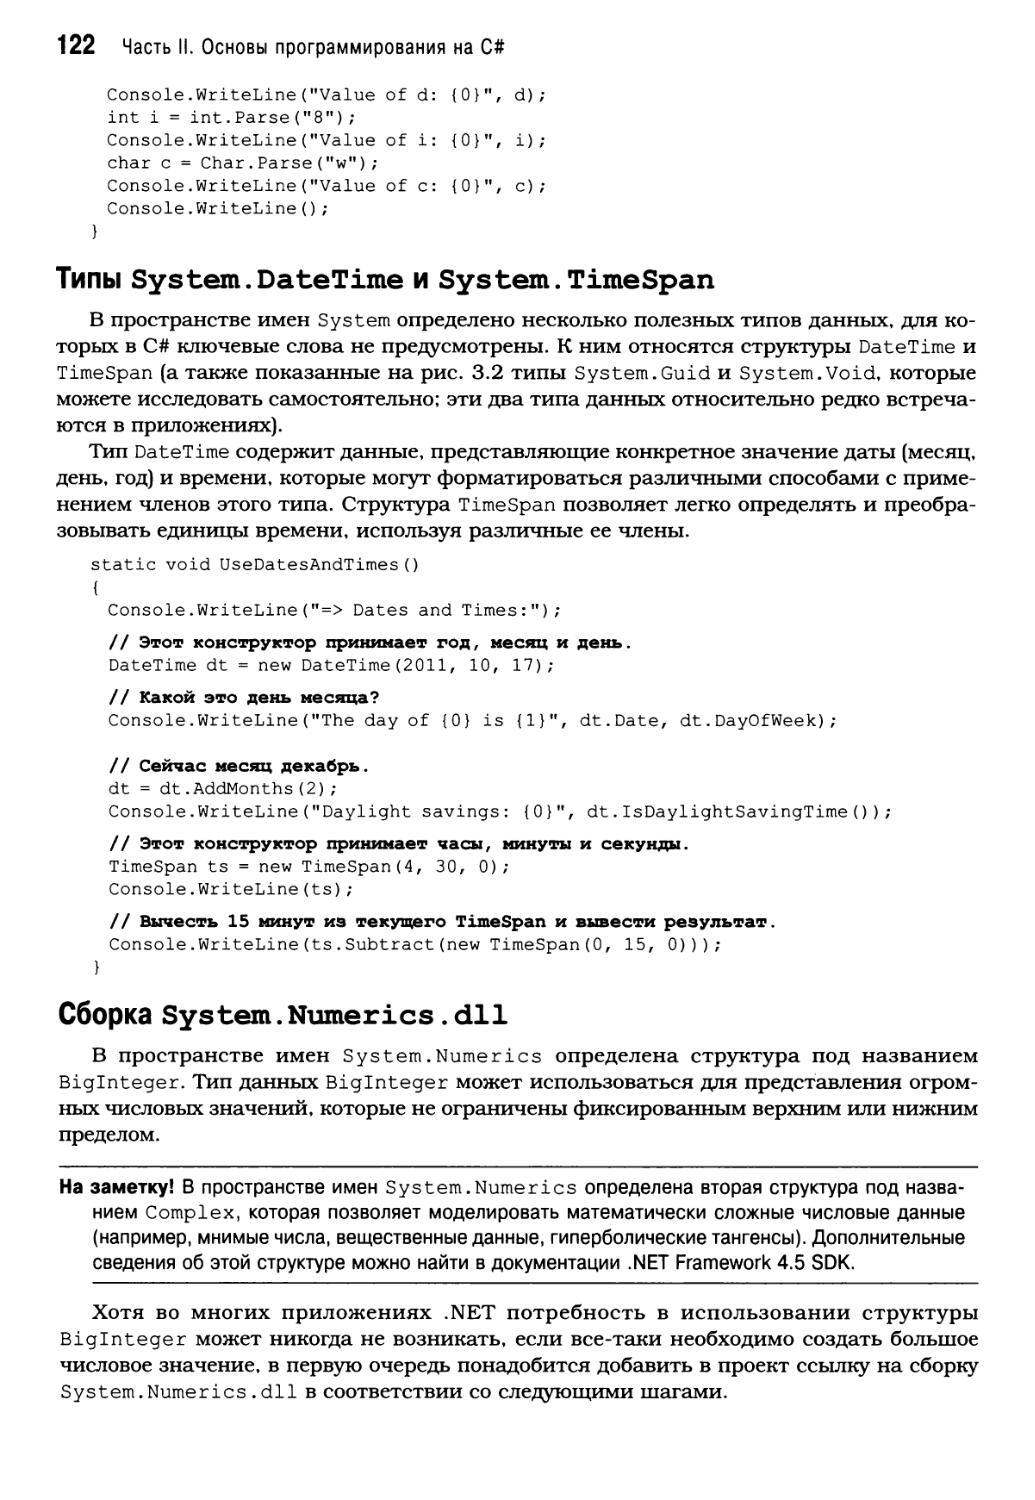 Сборка System.Numerics.dll